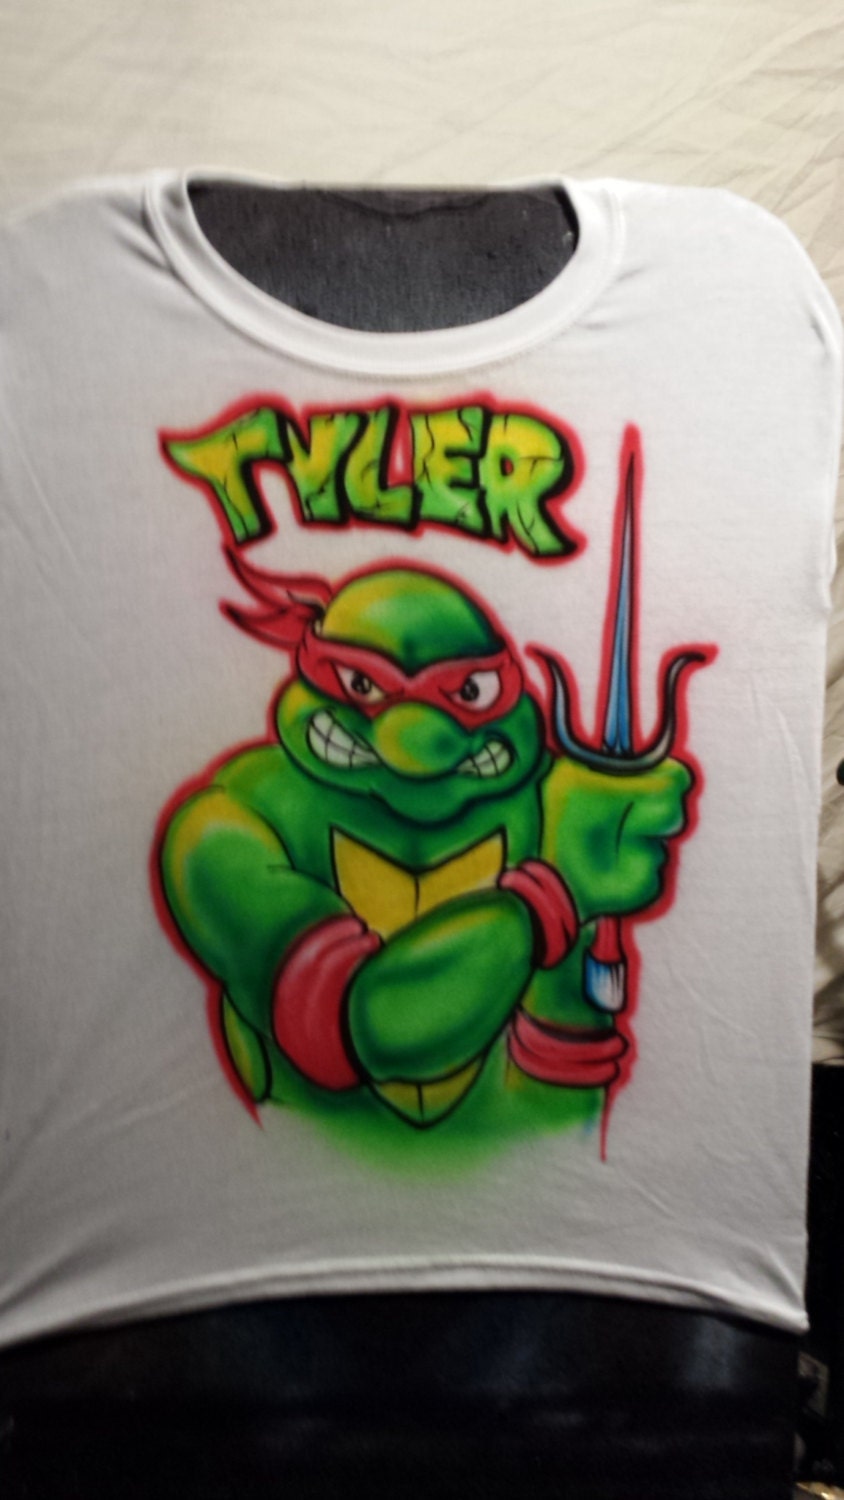  Custom  Airbrush  tee shirt  Turtle T Shirt  Freehand not a